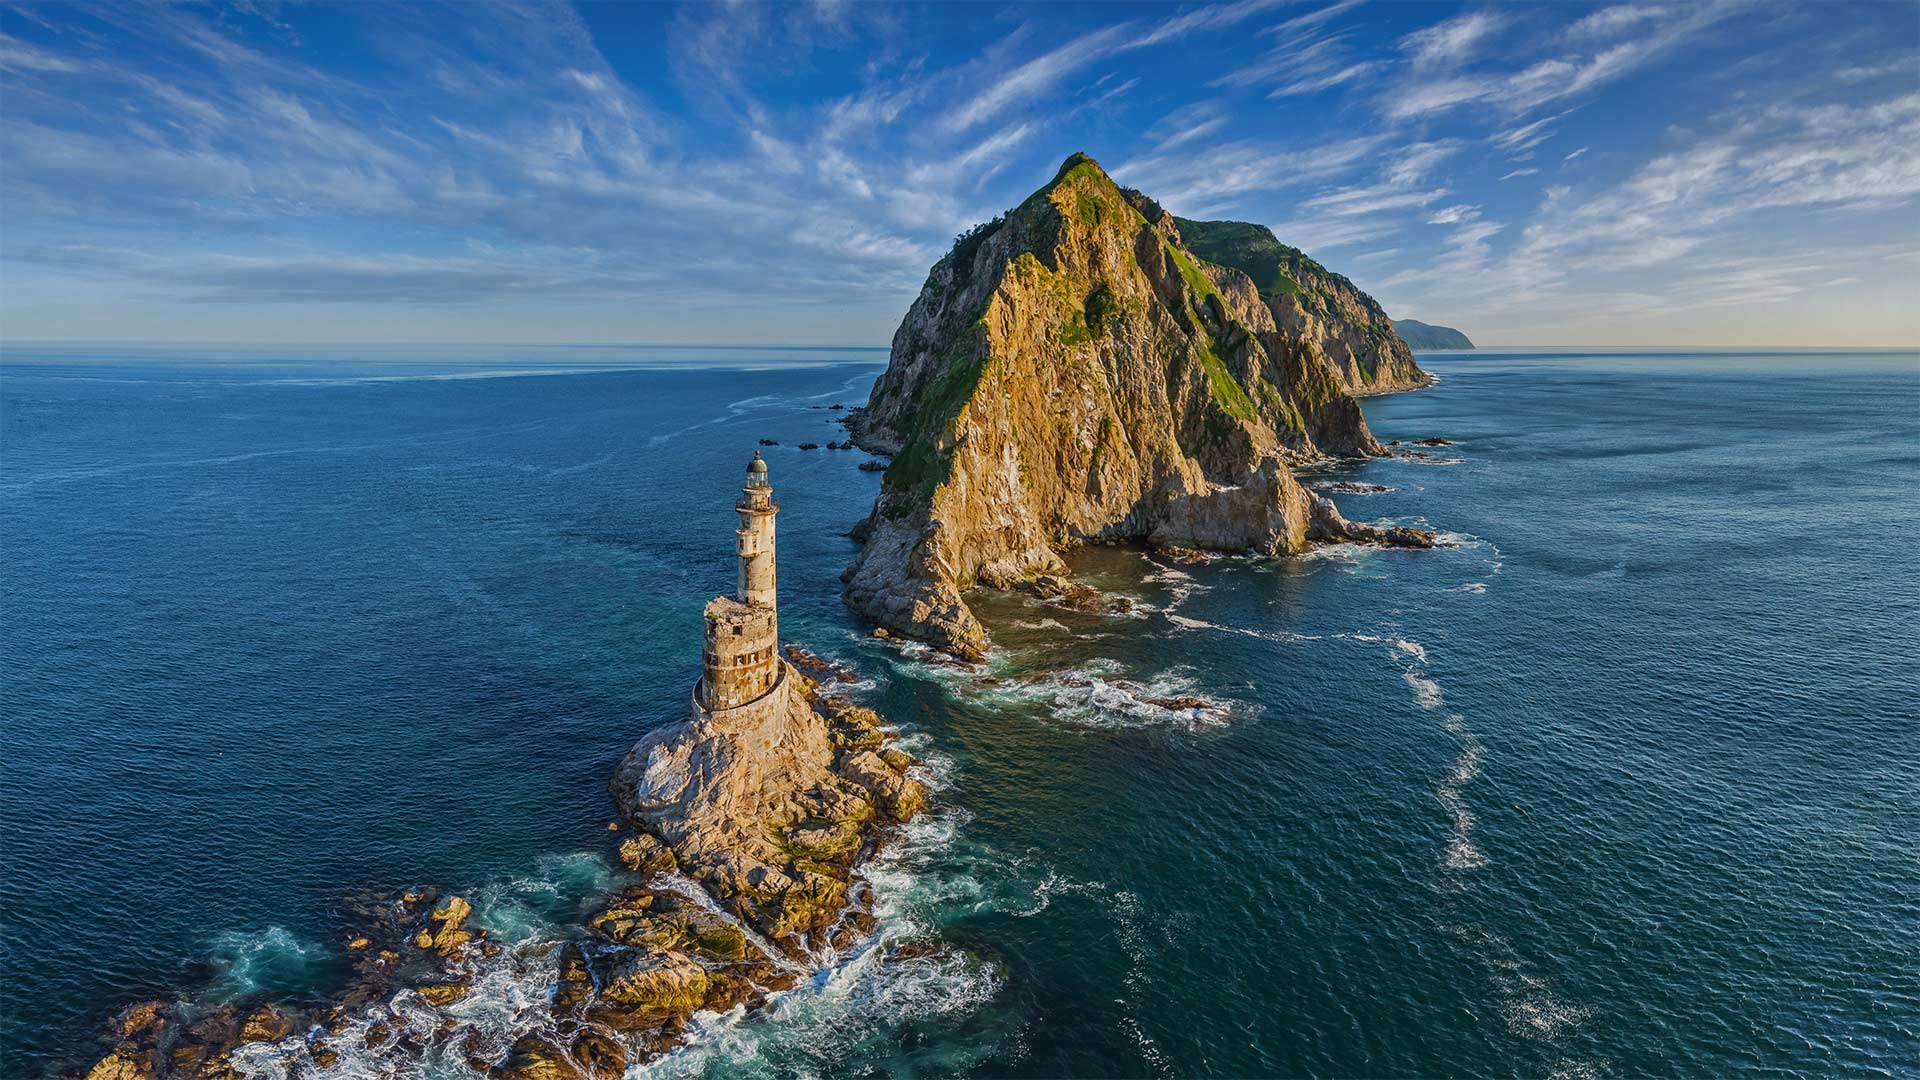 Landscape Nature Sea Island Rocks Lighthouse Sky Russia Bing 1920x1080